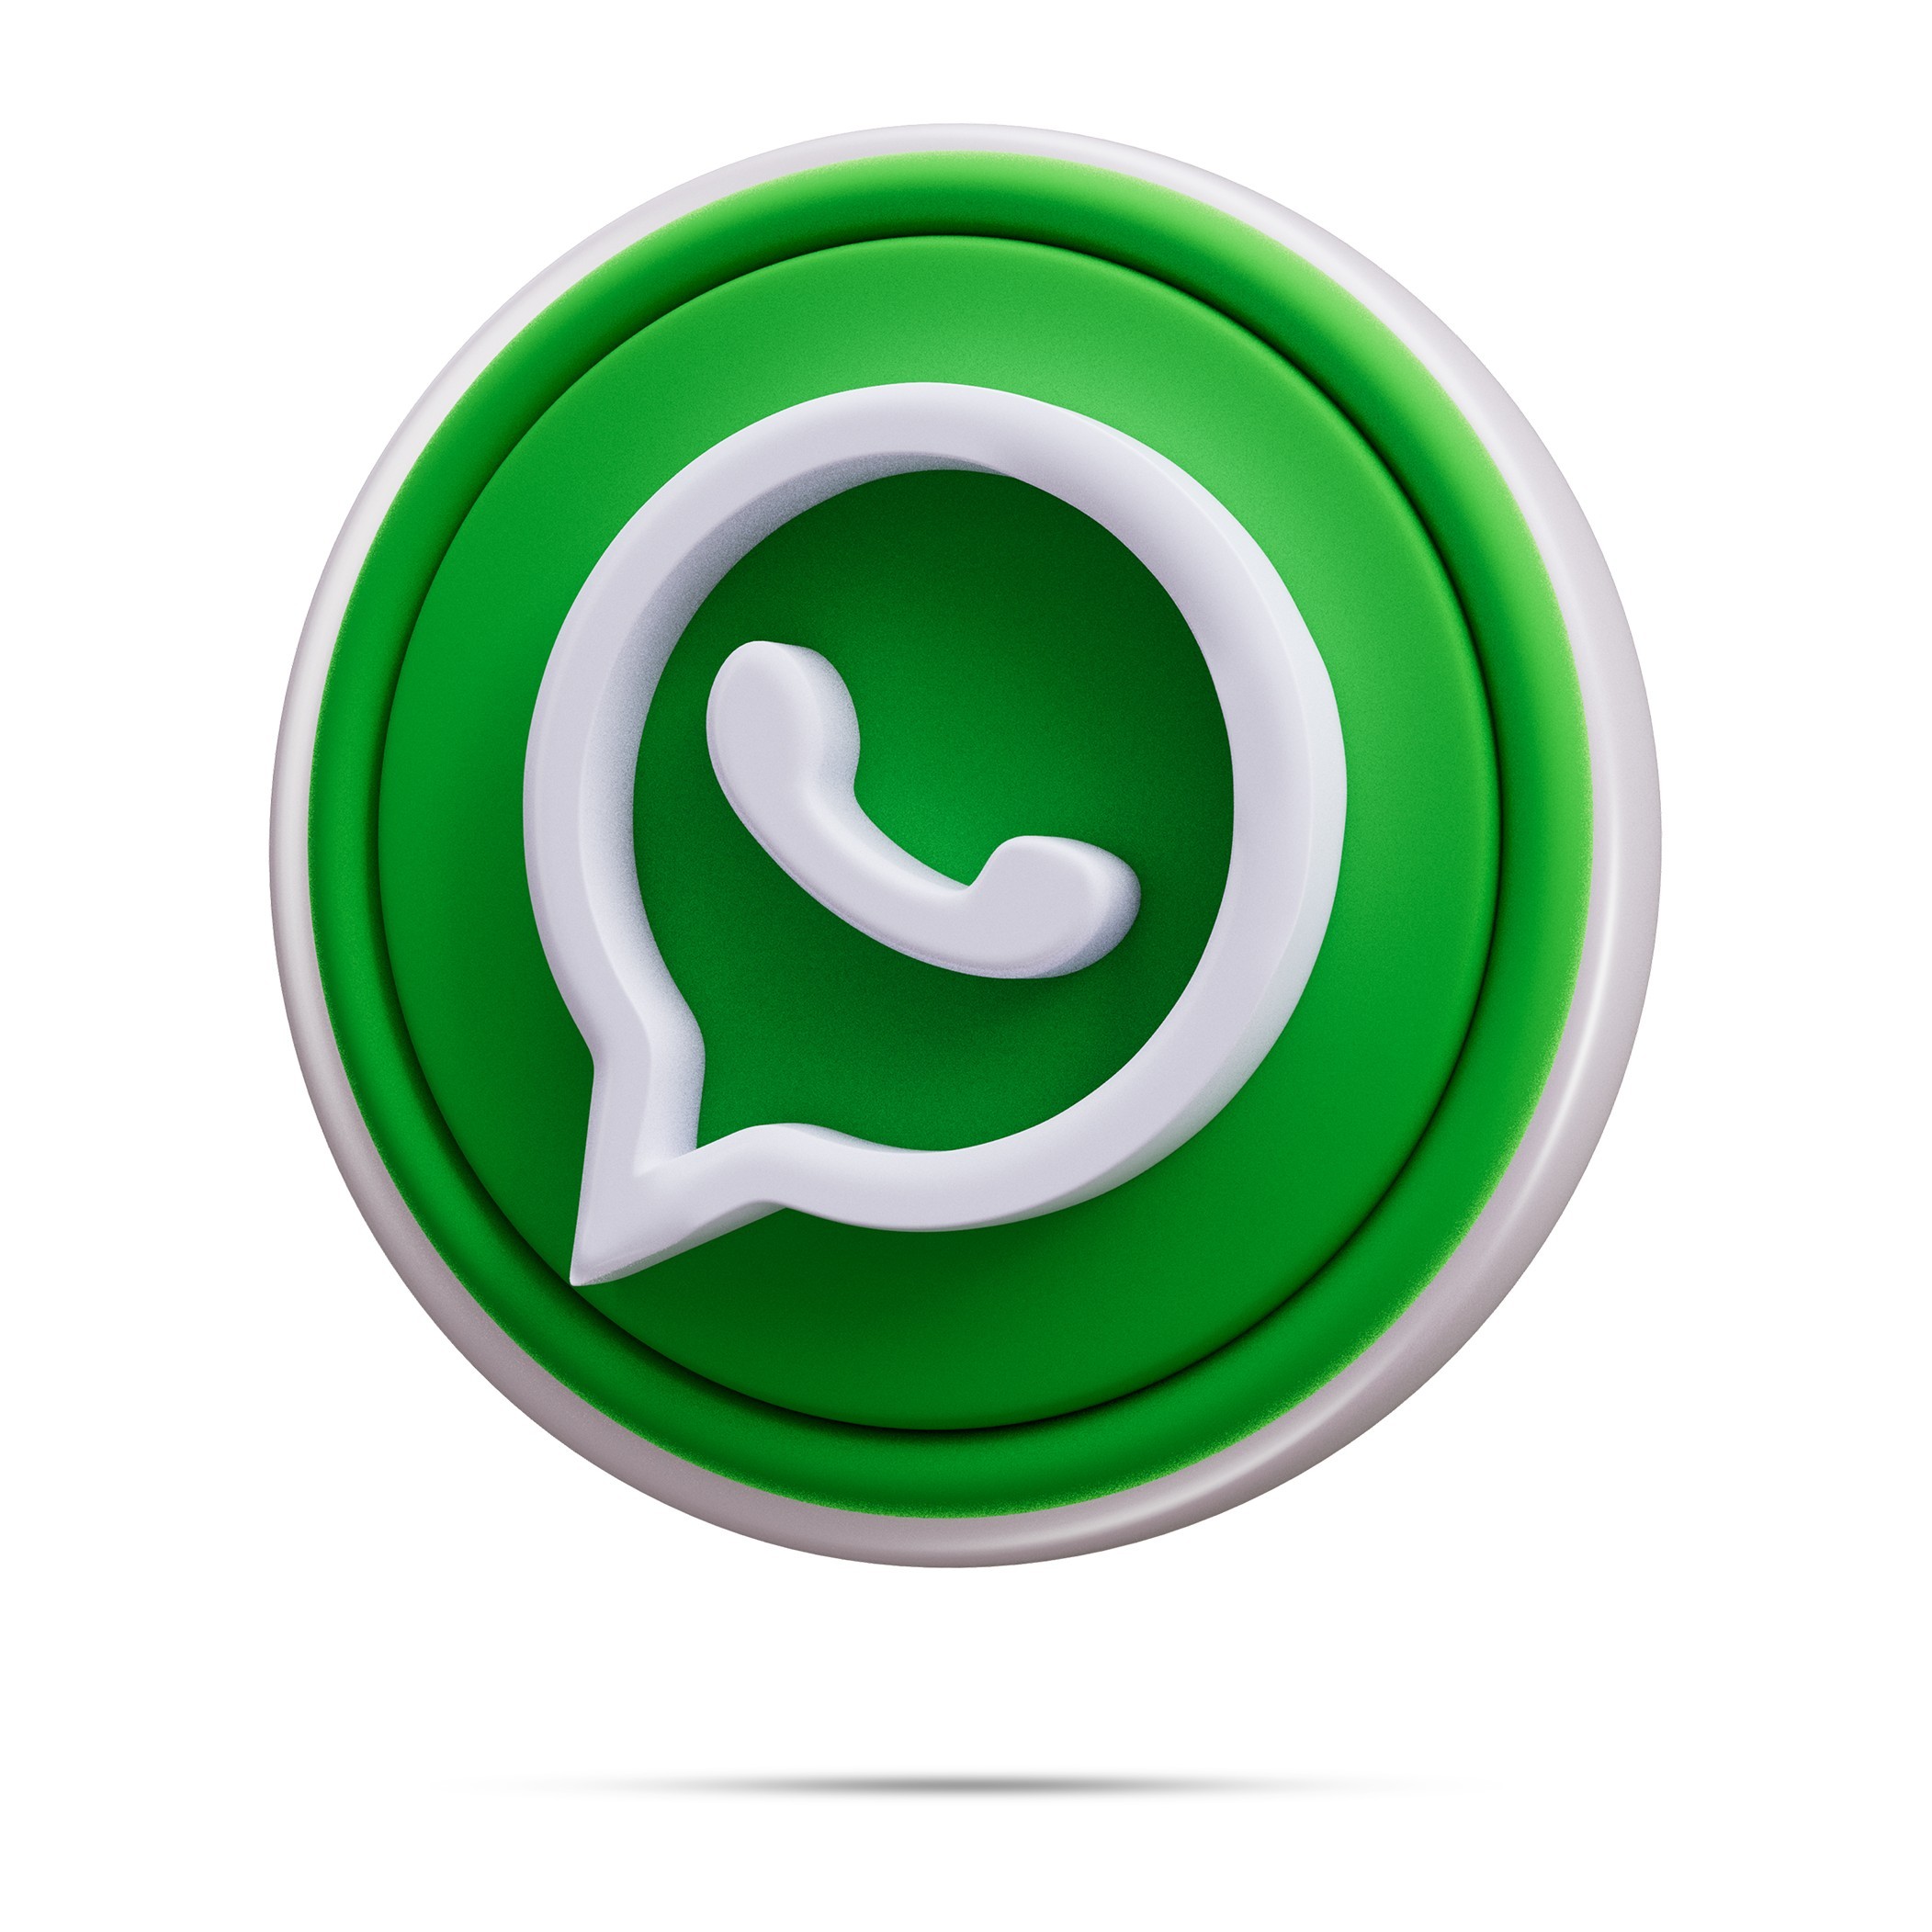 Whatsapp Chat Logo